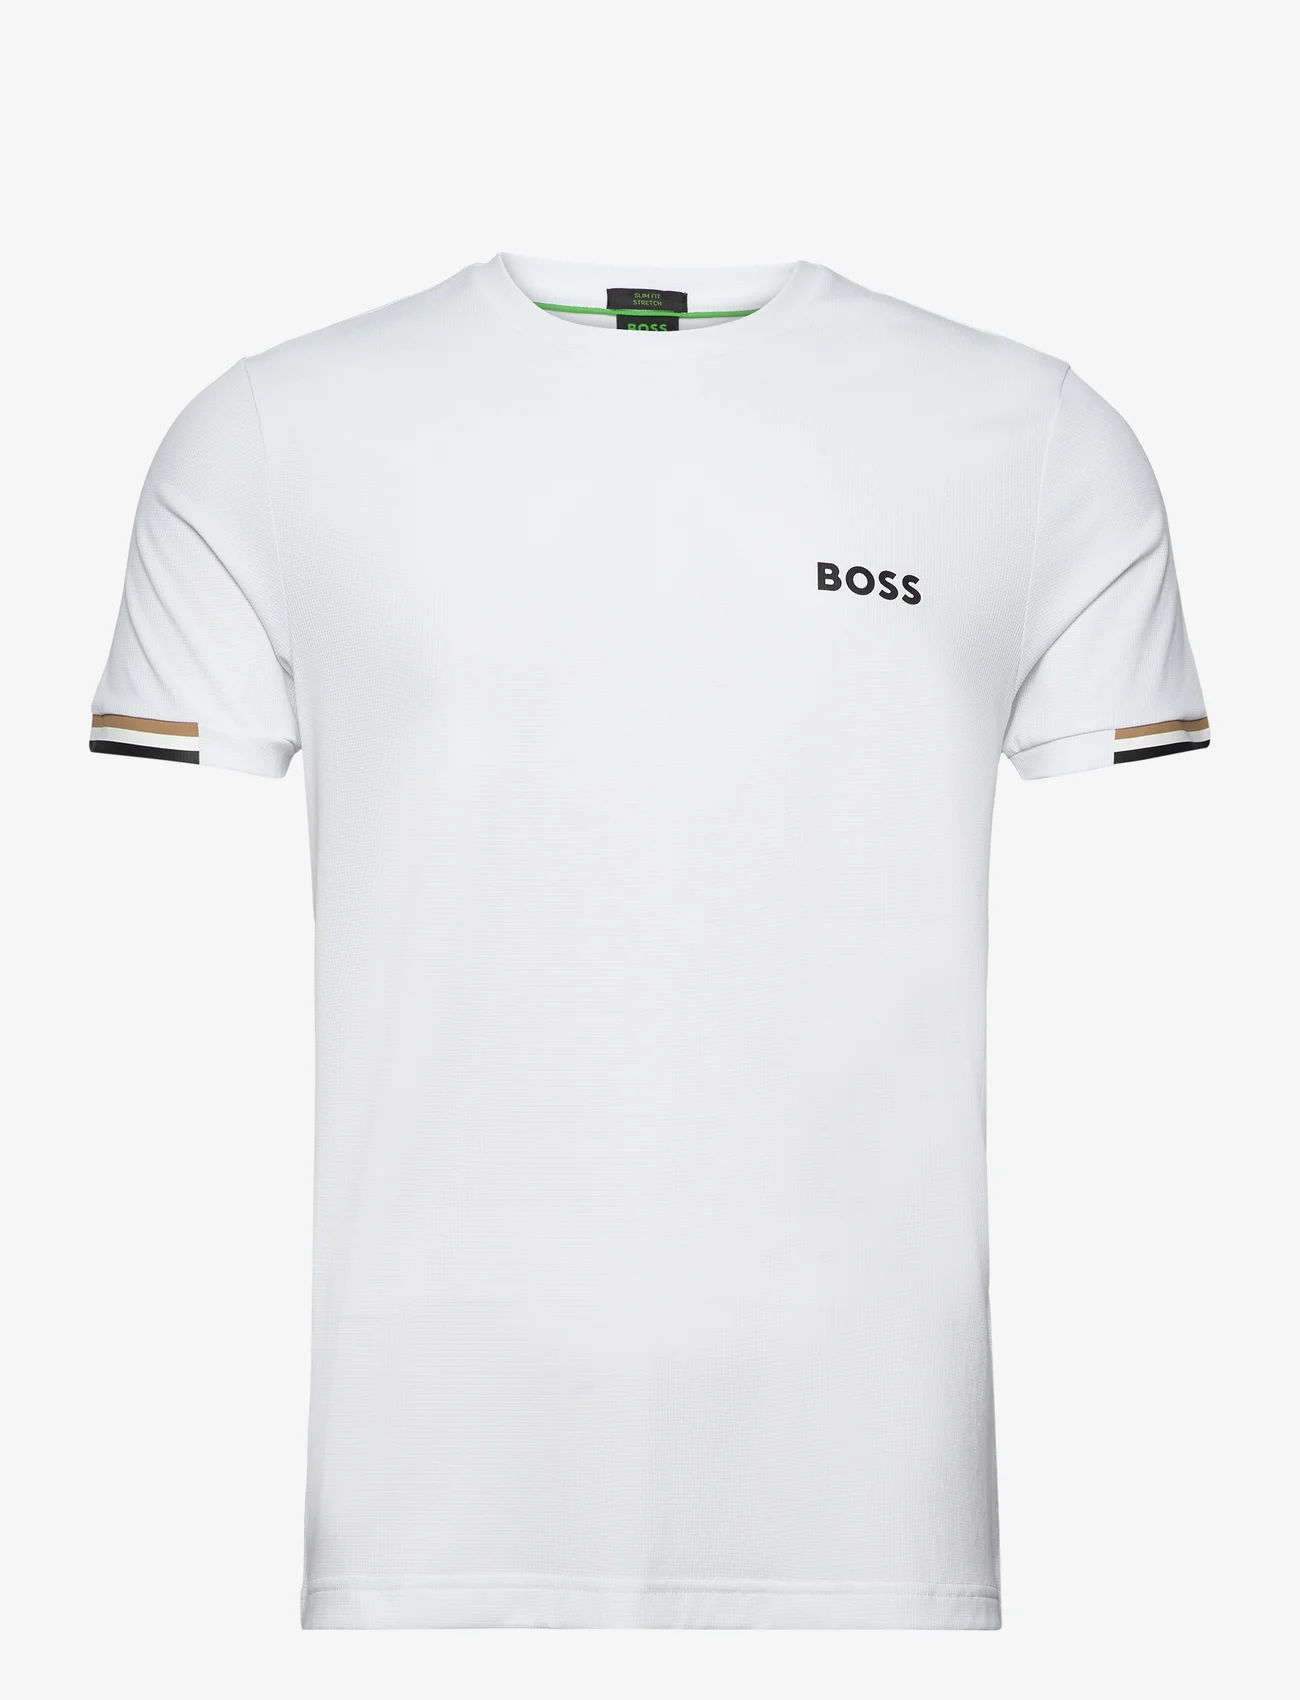 BOSS - Tee MB - t-shirts - white - 0